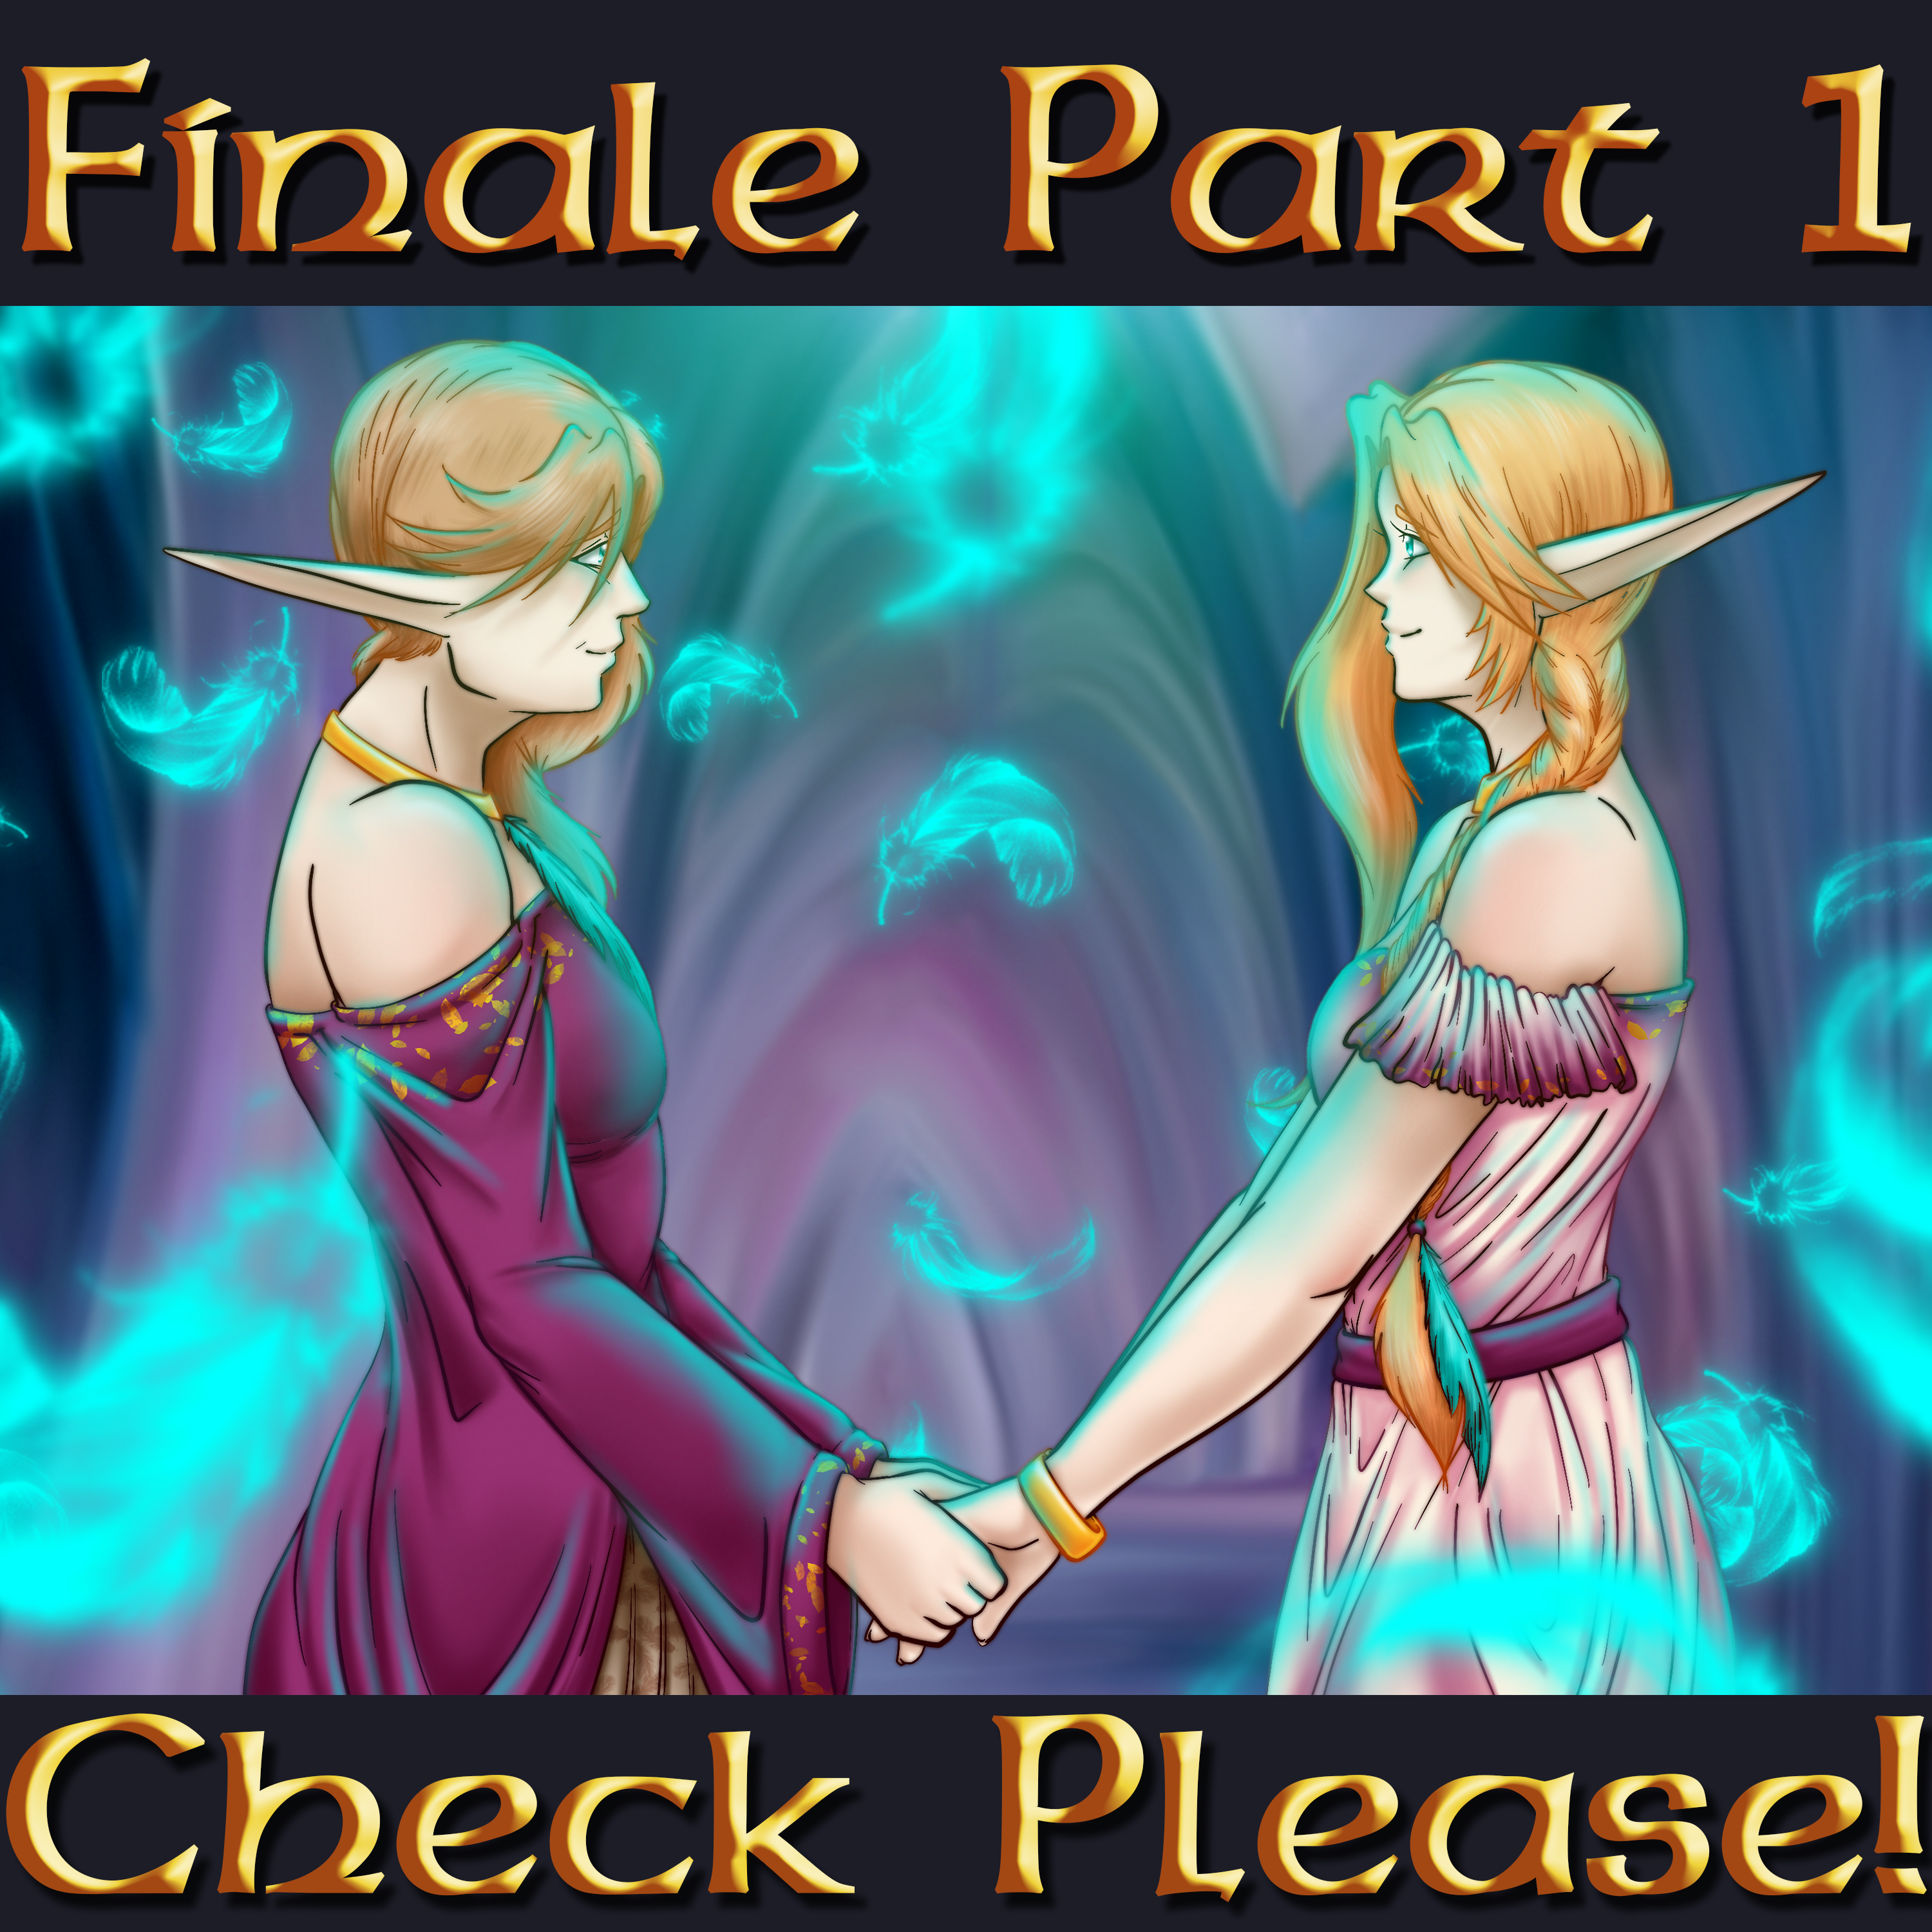 Check Please! S1 Finale part 1: The Ceremony